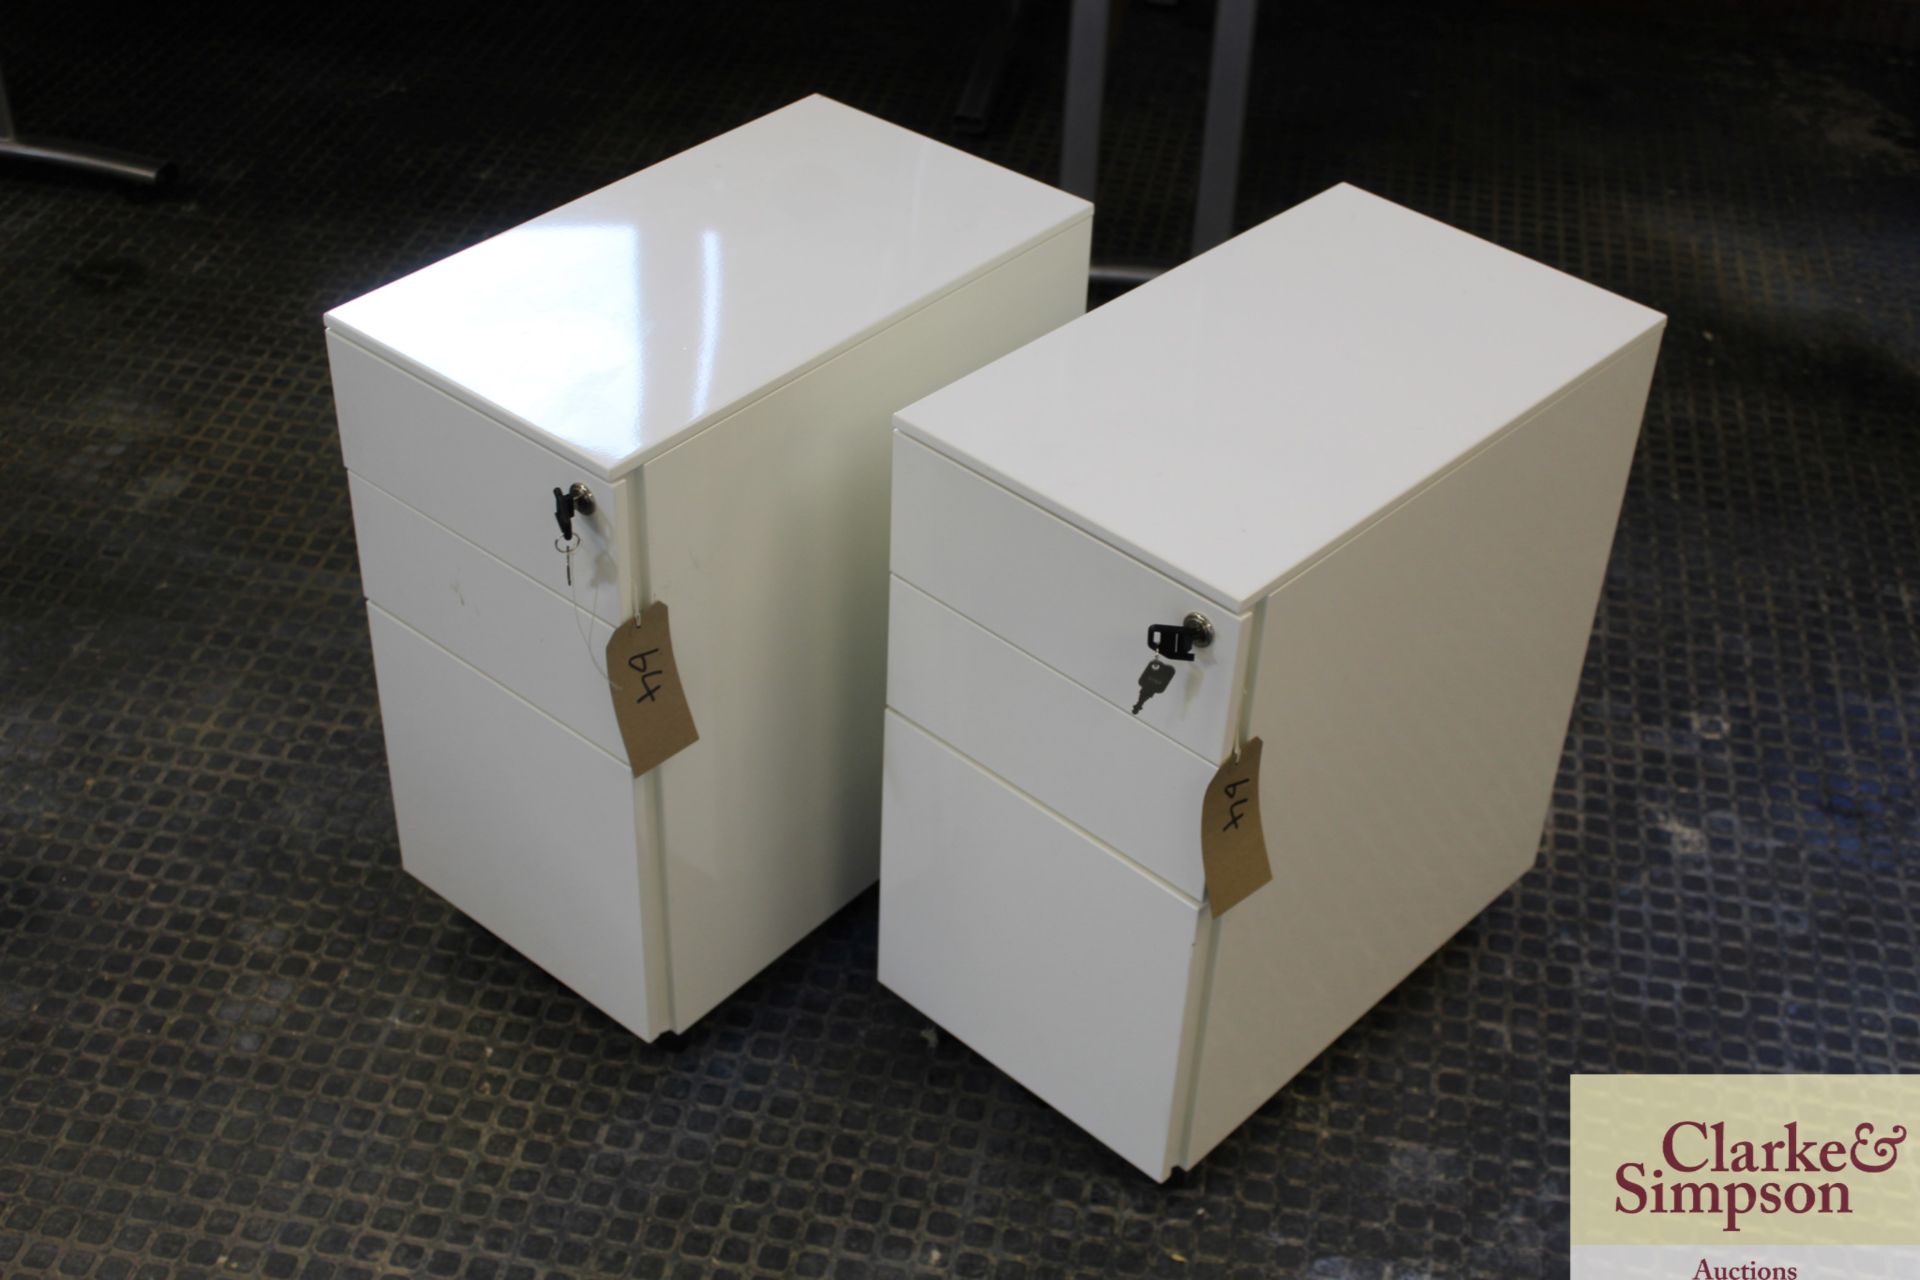 2x white metal 3 drawer desk pedestals. With keys.